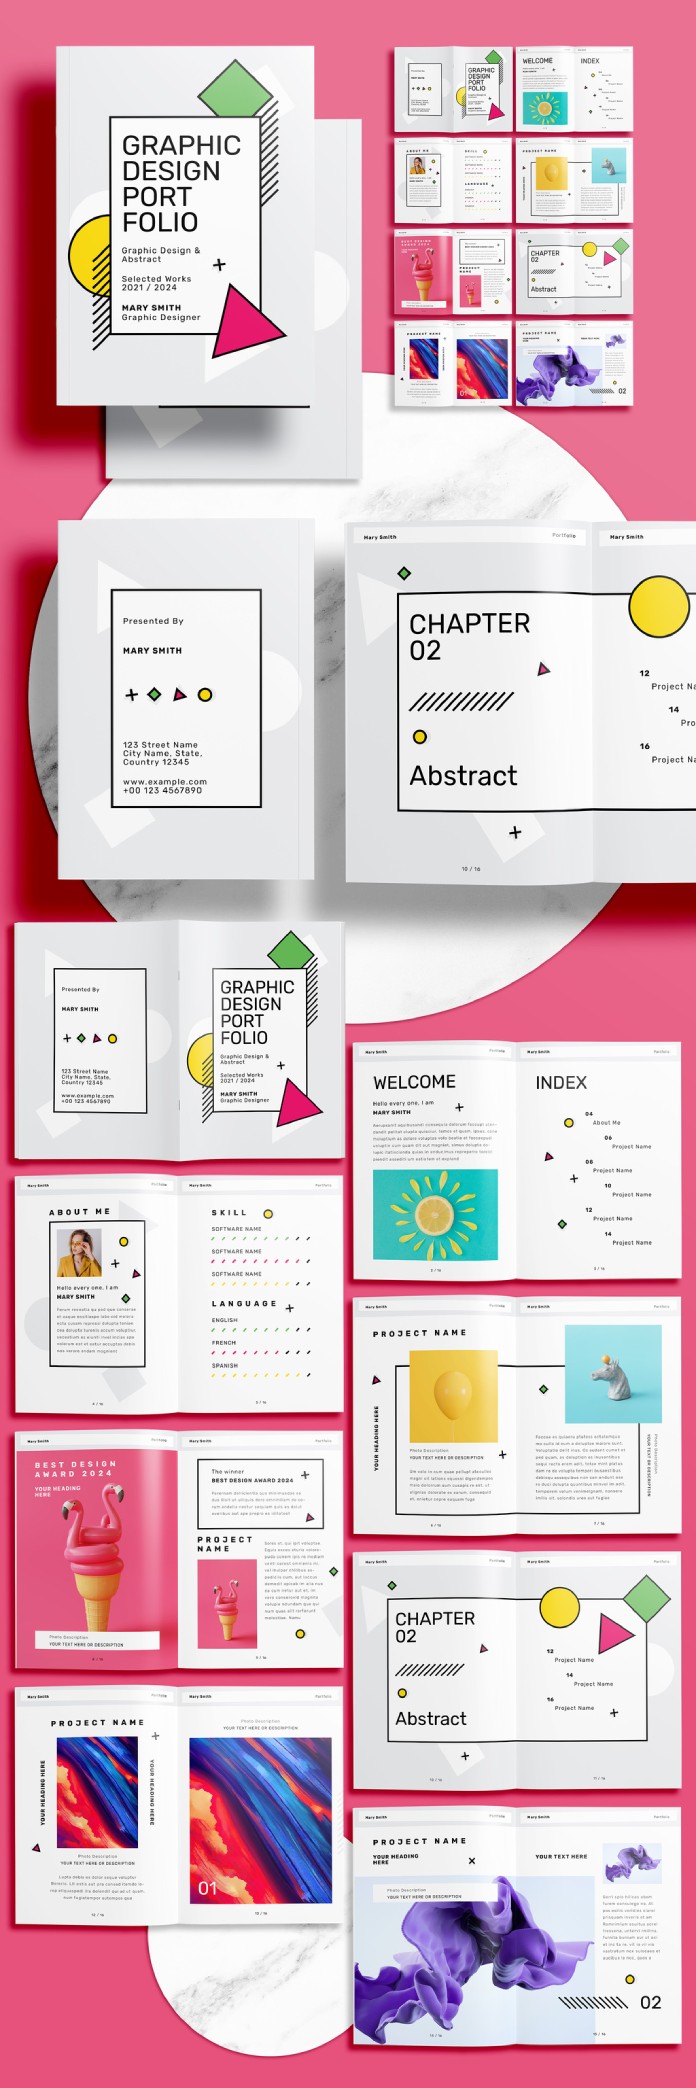 A Fun and Colorful Graphic Design Portfolio Template for Adobe InDesign